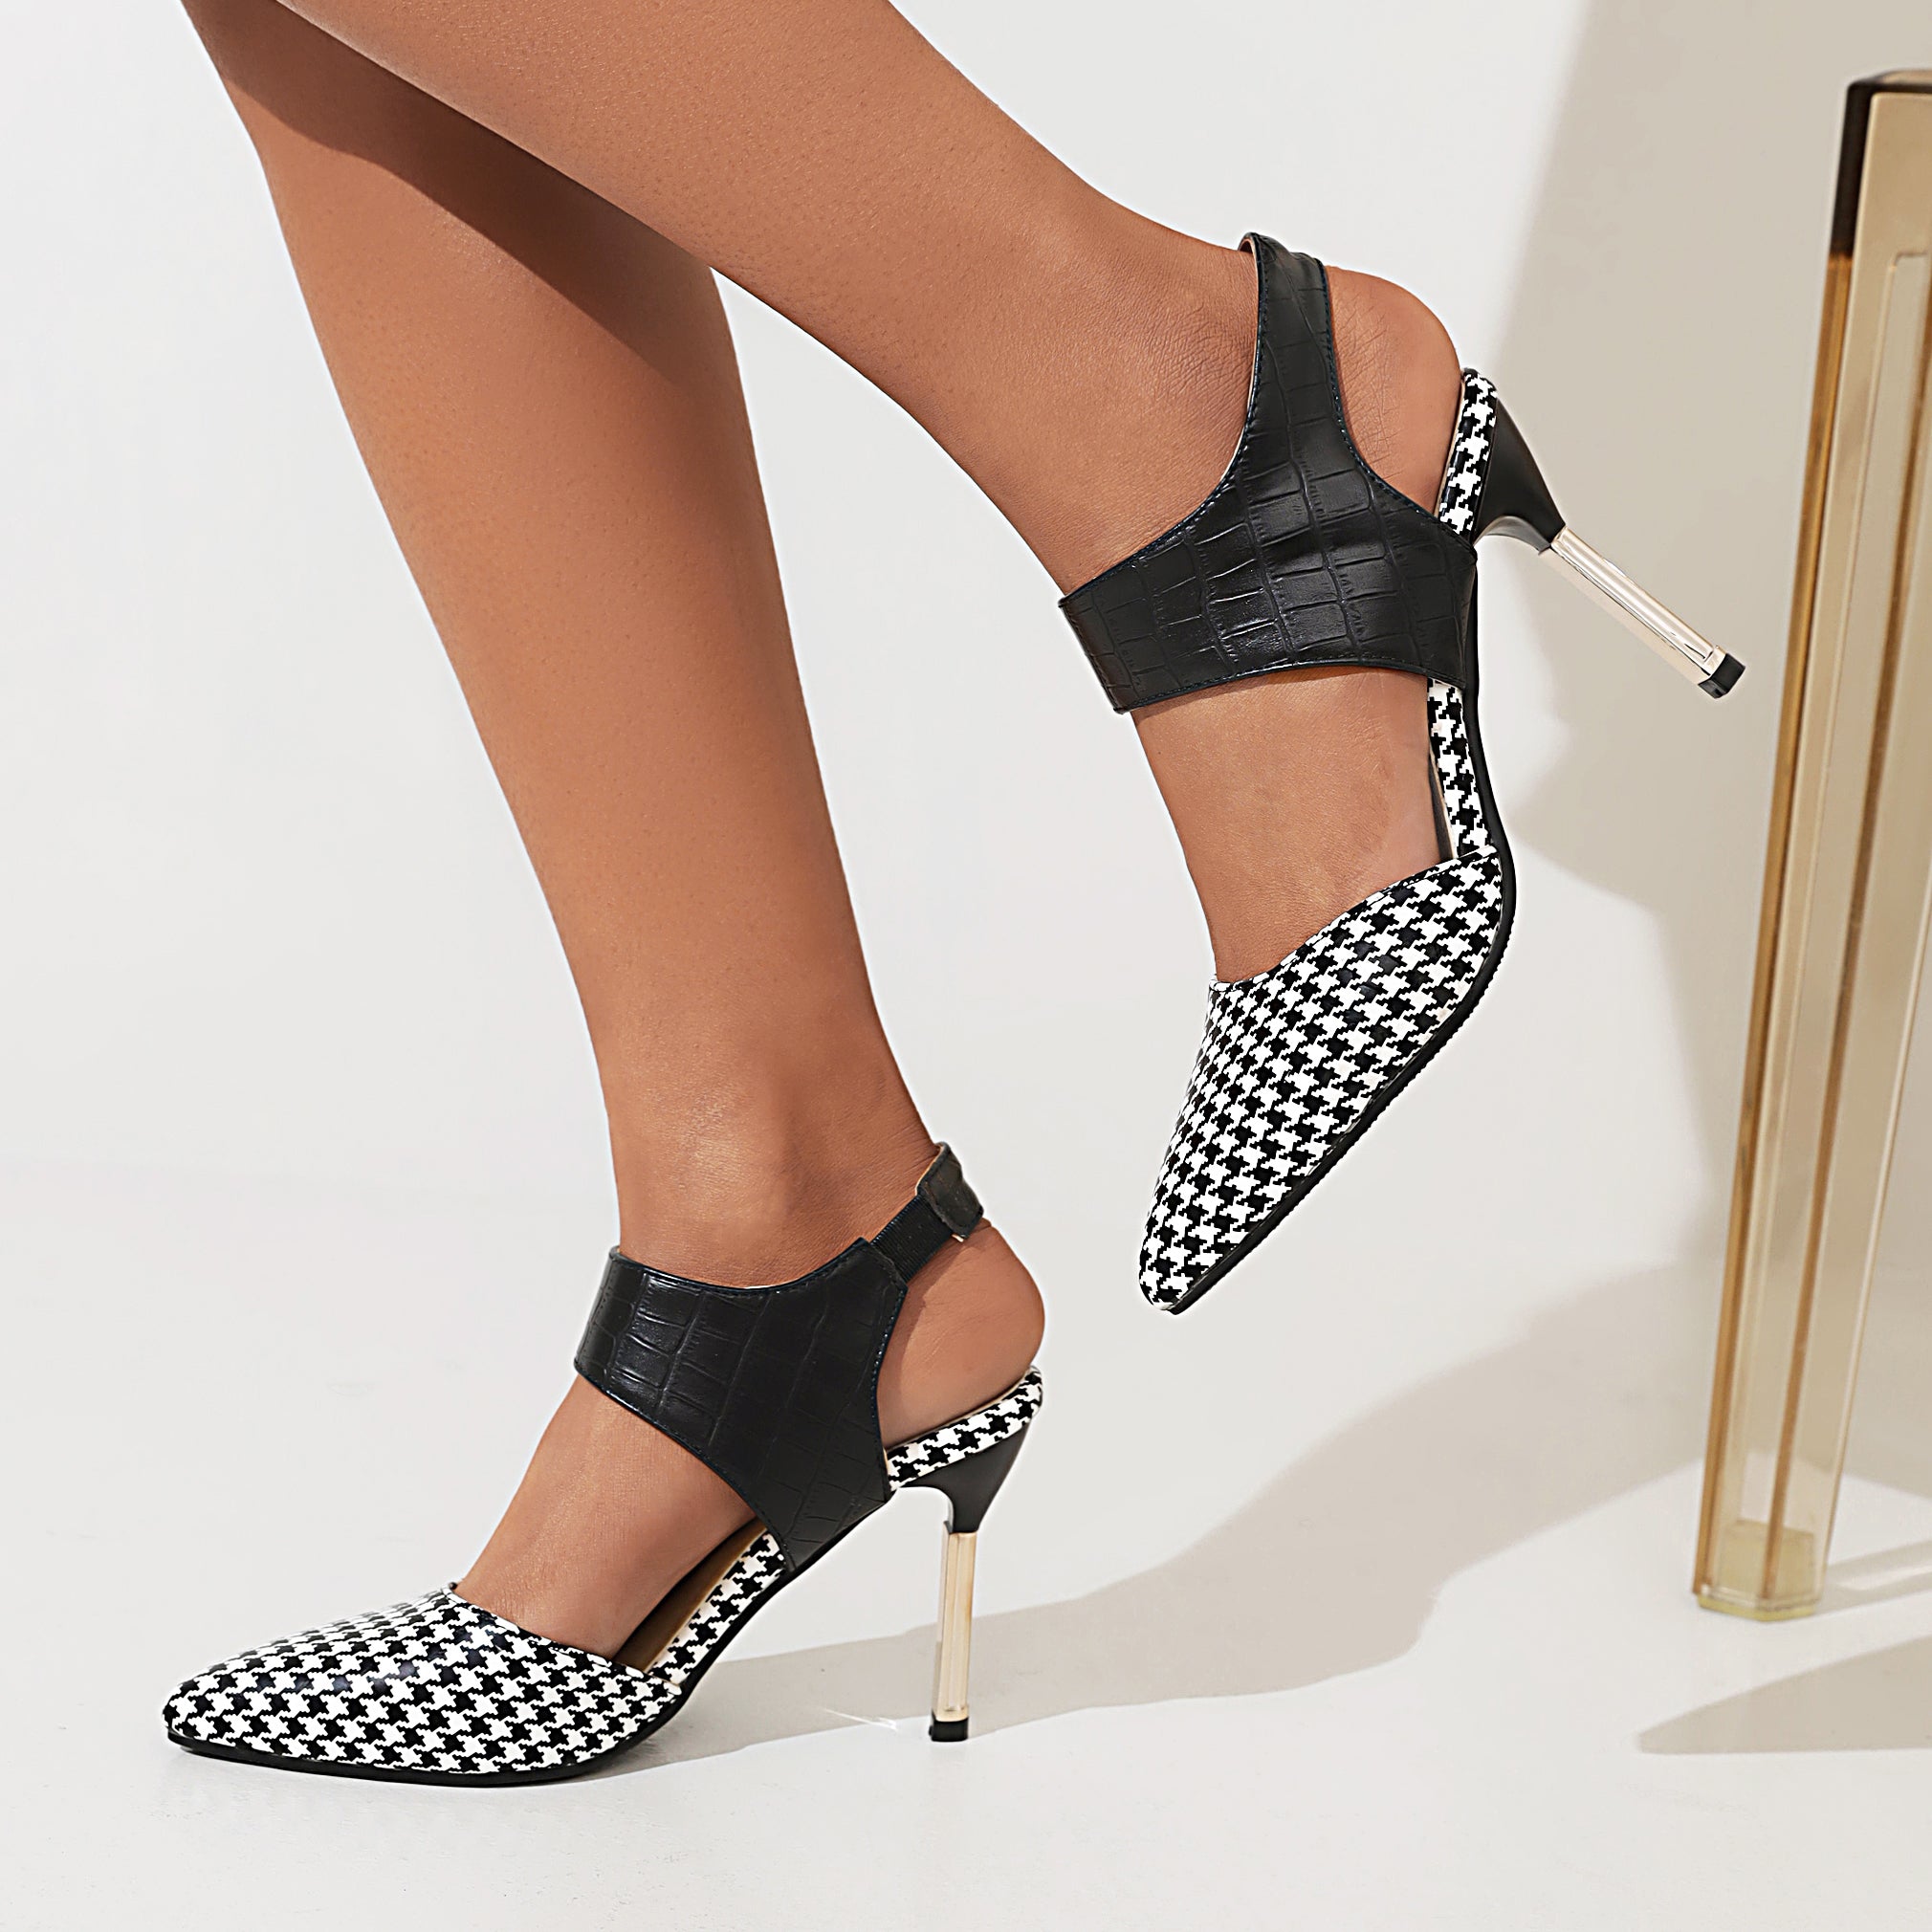 Bigsizeheels Slingback Peep Toe Stiletto Heel Sandals - Black best oversized womens heels are from bigsizeheel®